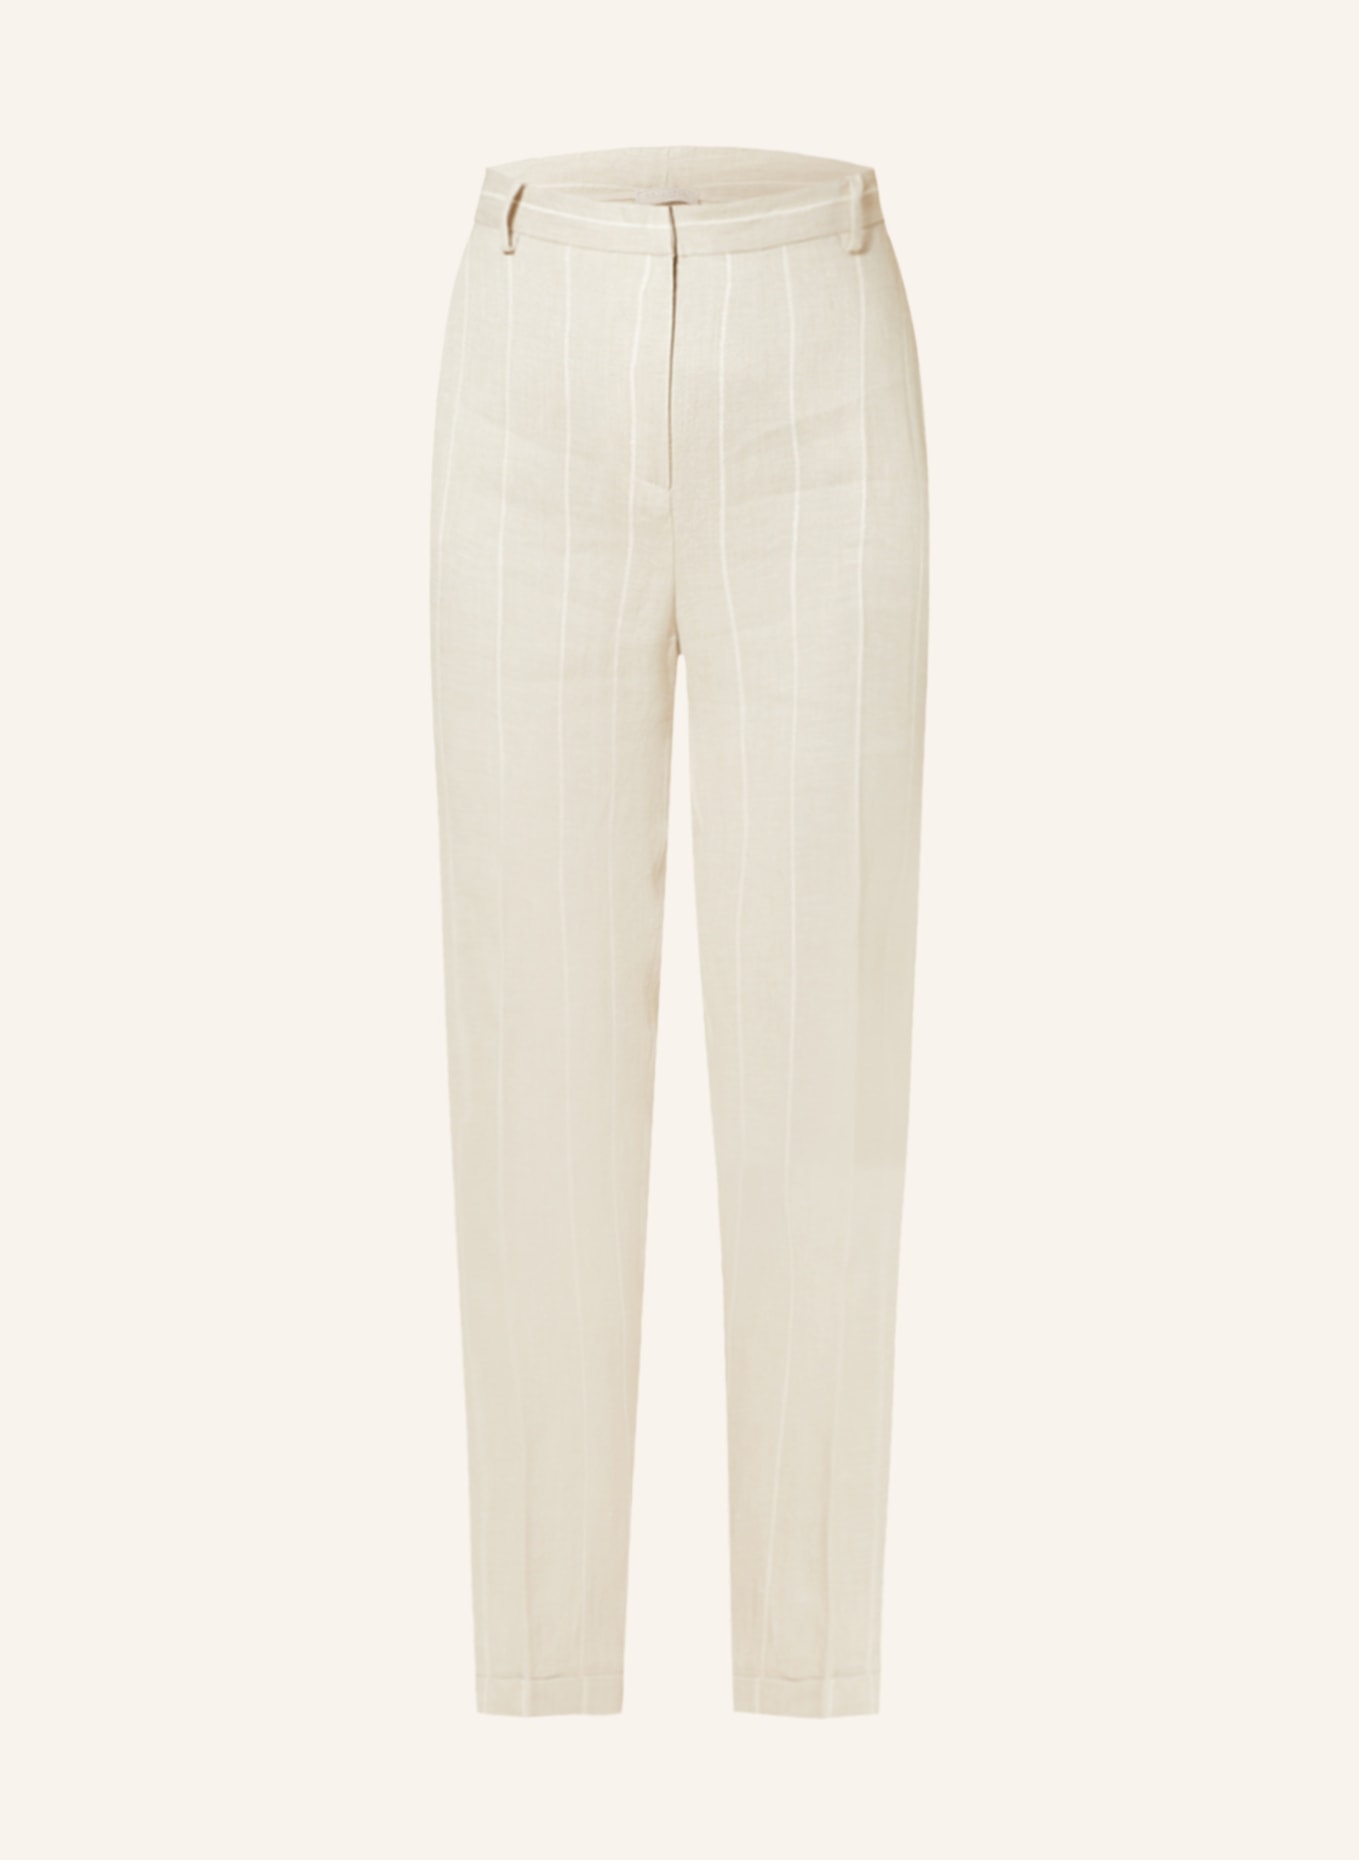 ANTONELLI firenze Linen pants with glitter thread, Color: BEIGE/ ECRU(Image null)